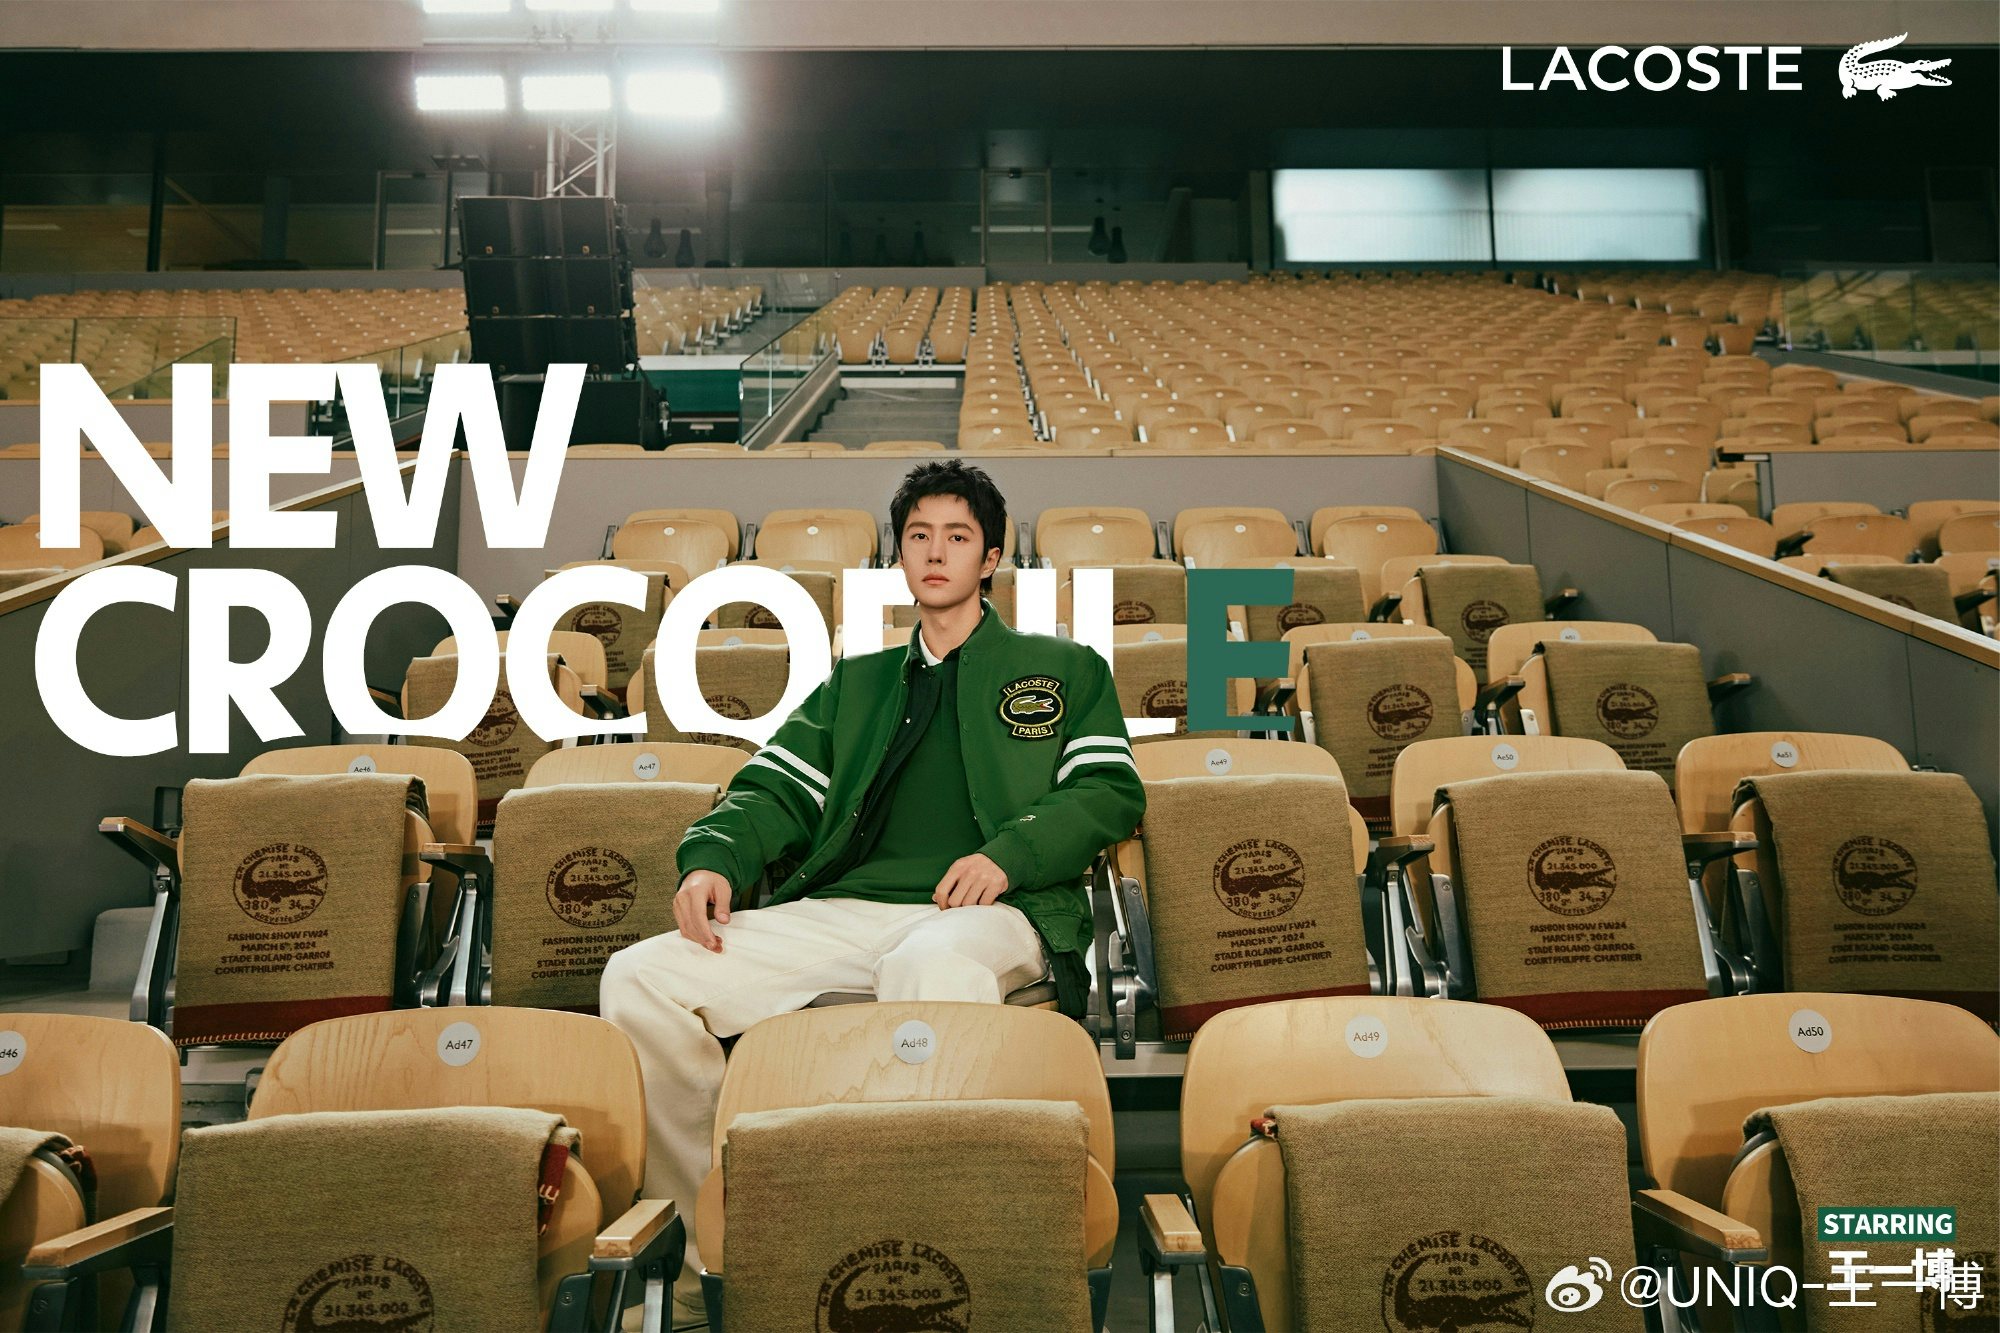 Lacoste campaign featuring actor and dancer Wang Yibo. Photo: Wang Yibo/Weibo